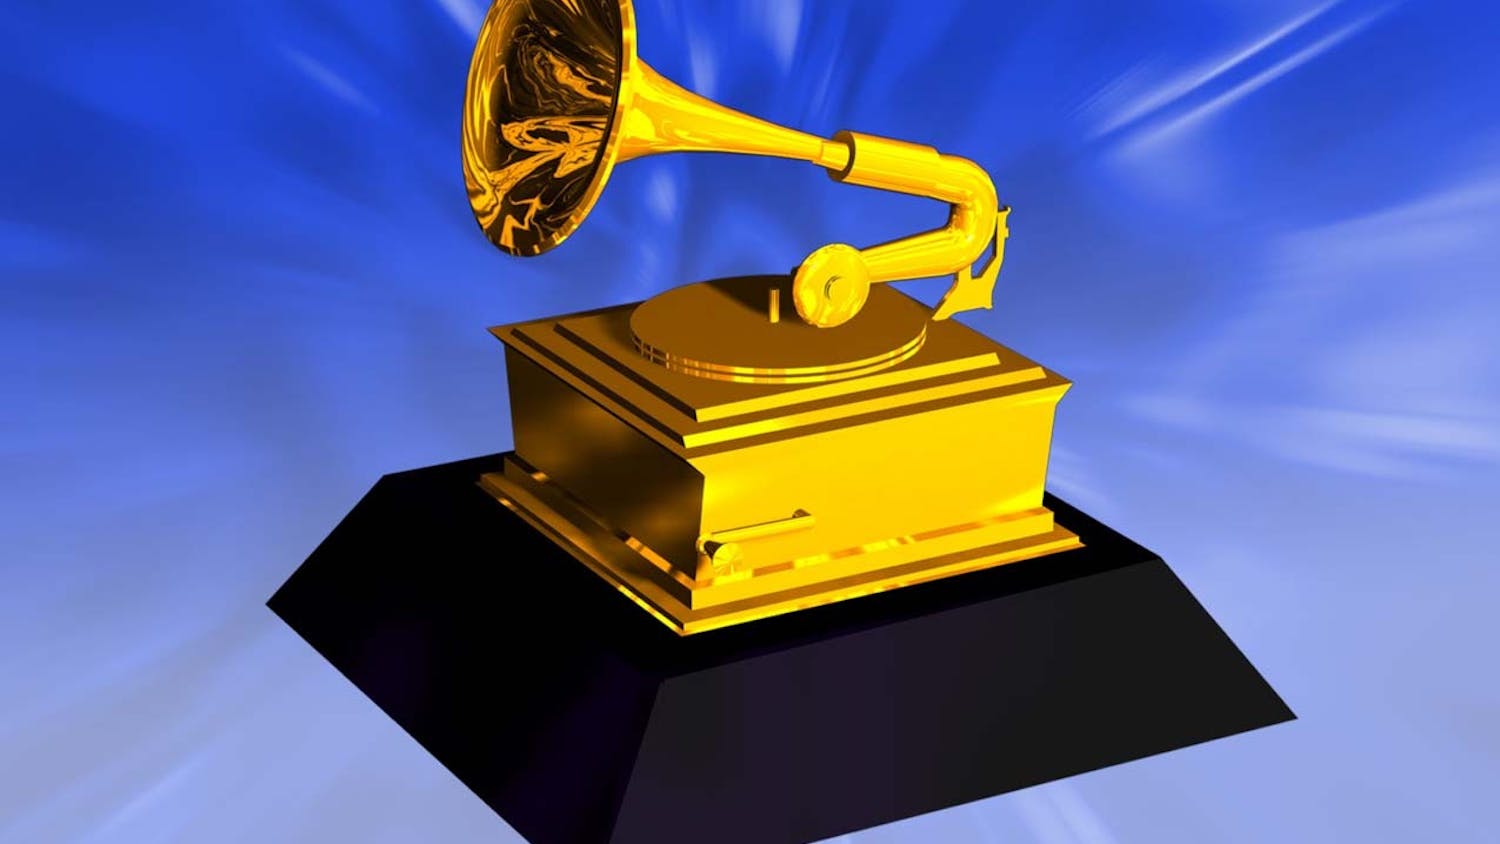 An illustration shows a Grammy award.